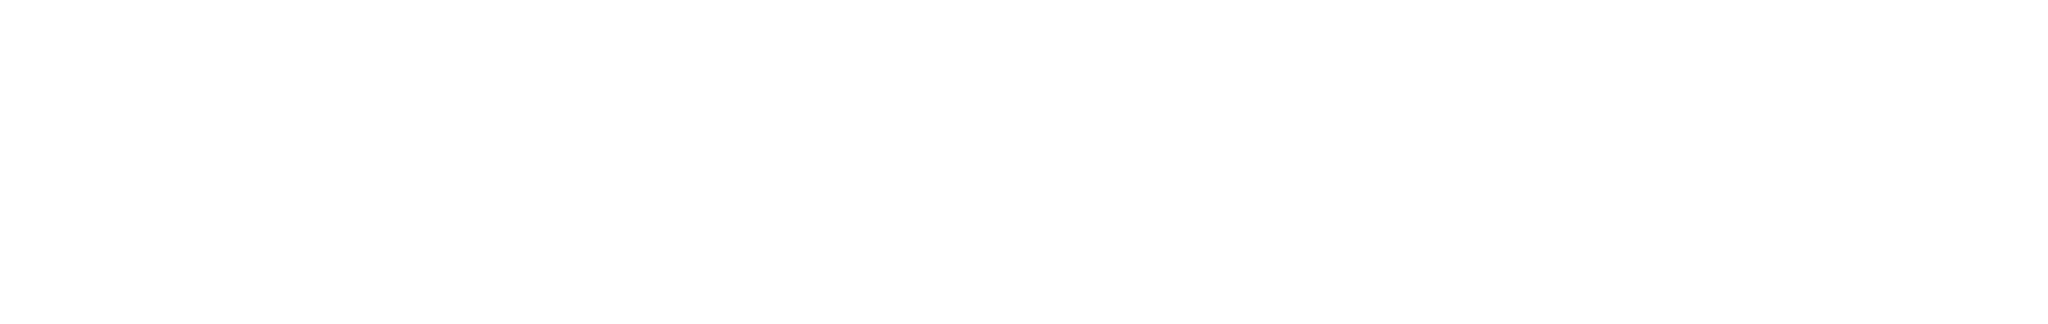 Panther National Company Logo